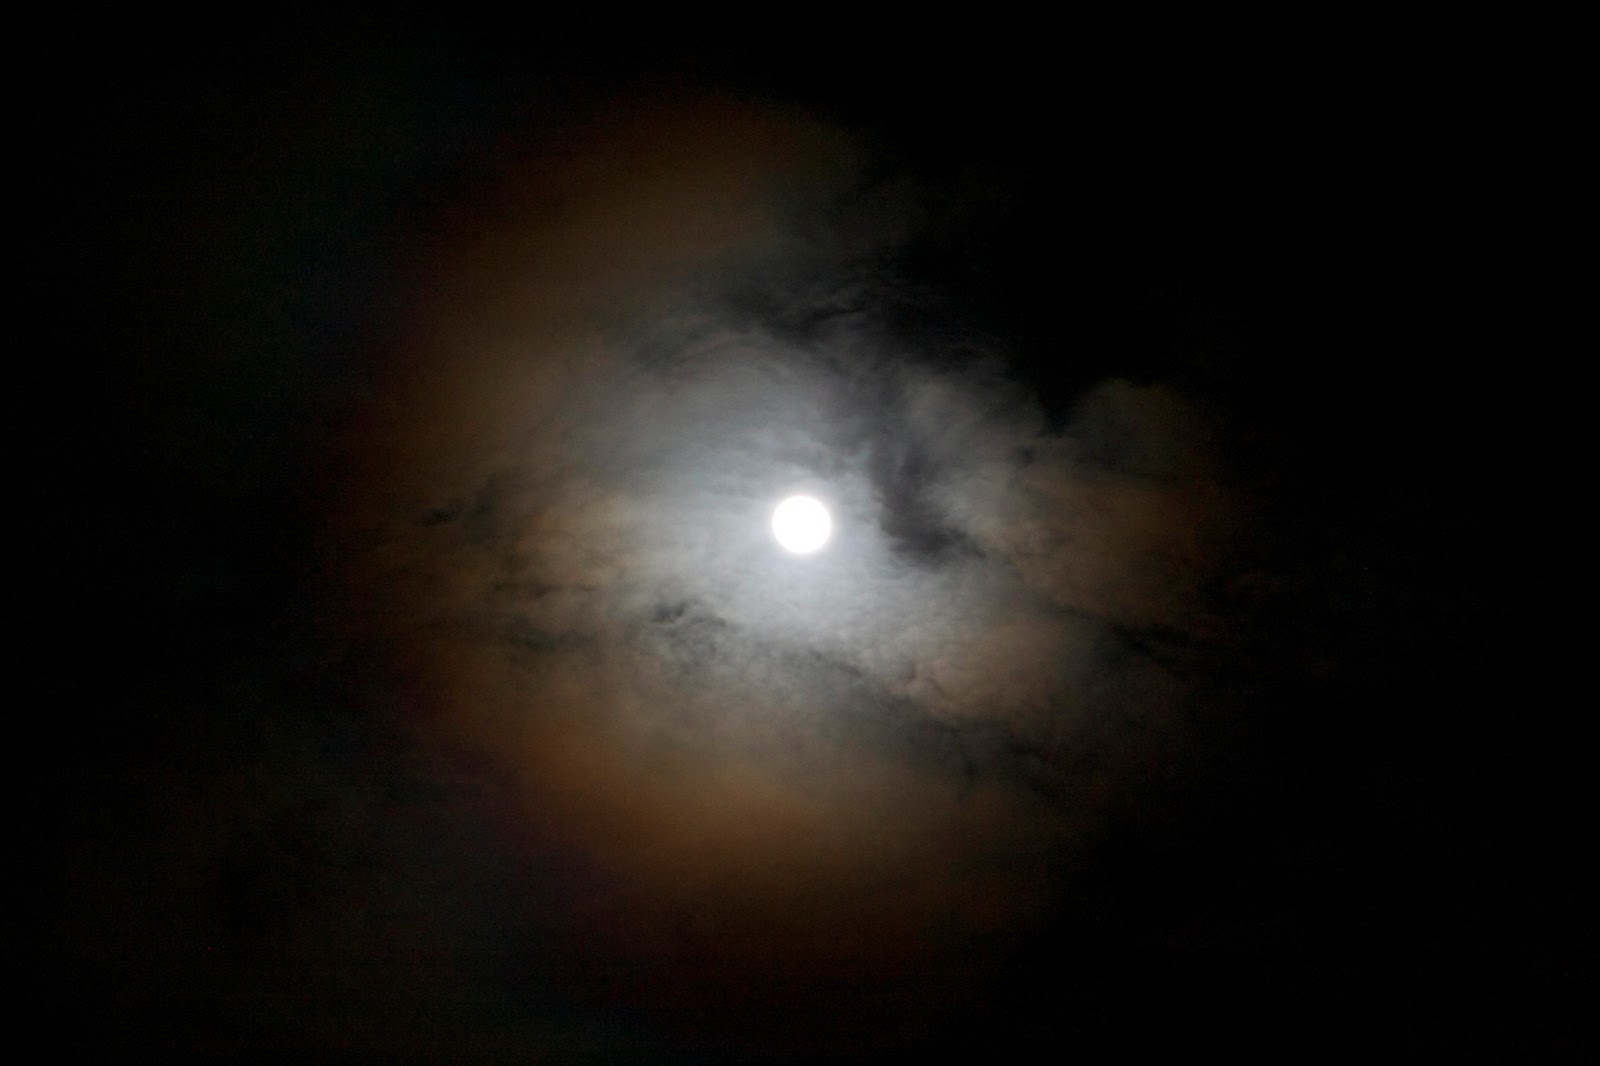 What's this ring around the moon tonight?? : r/cincinnati